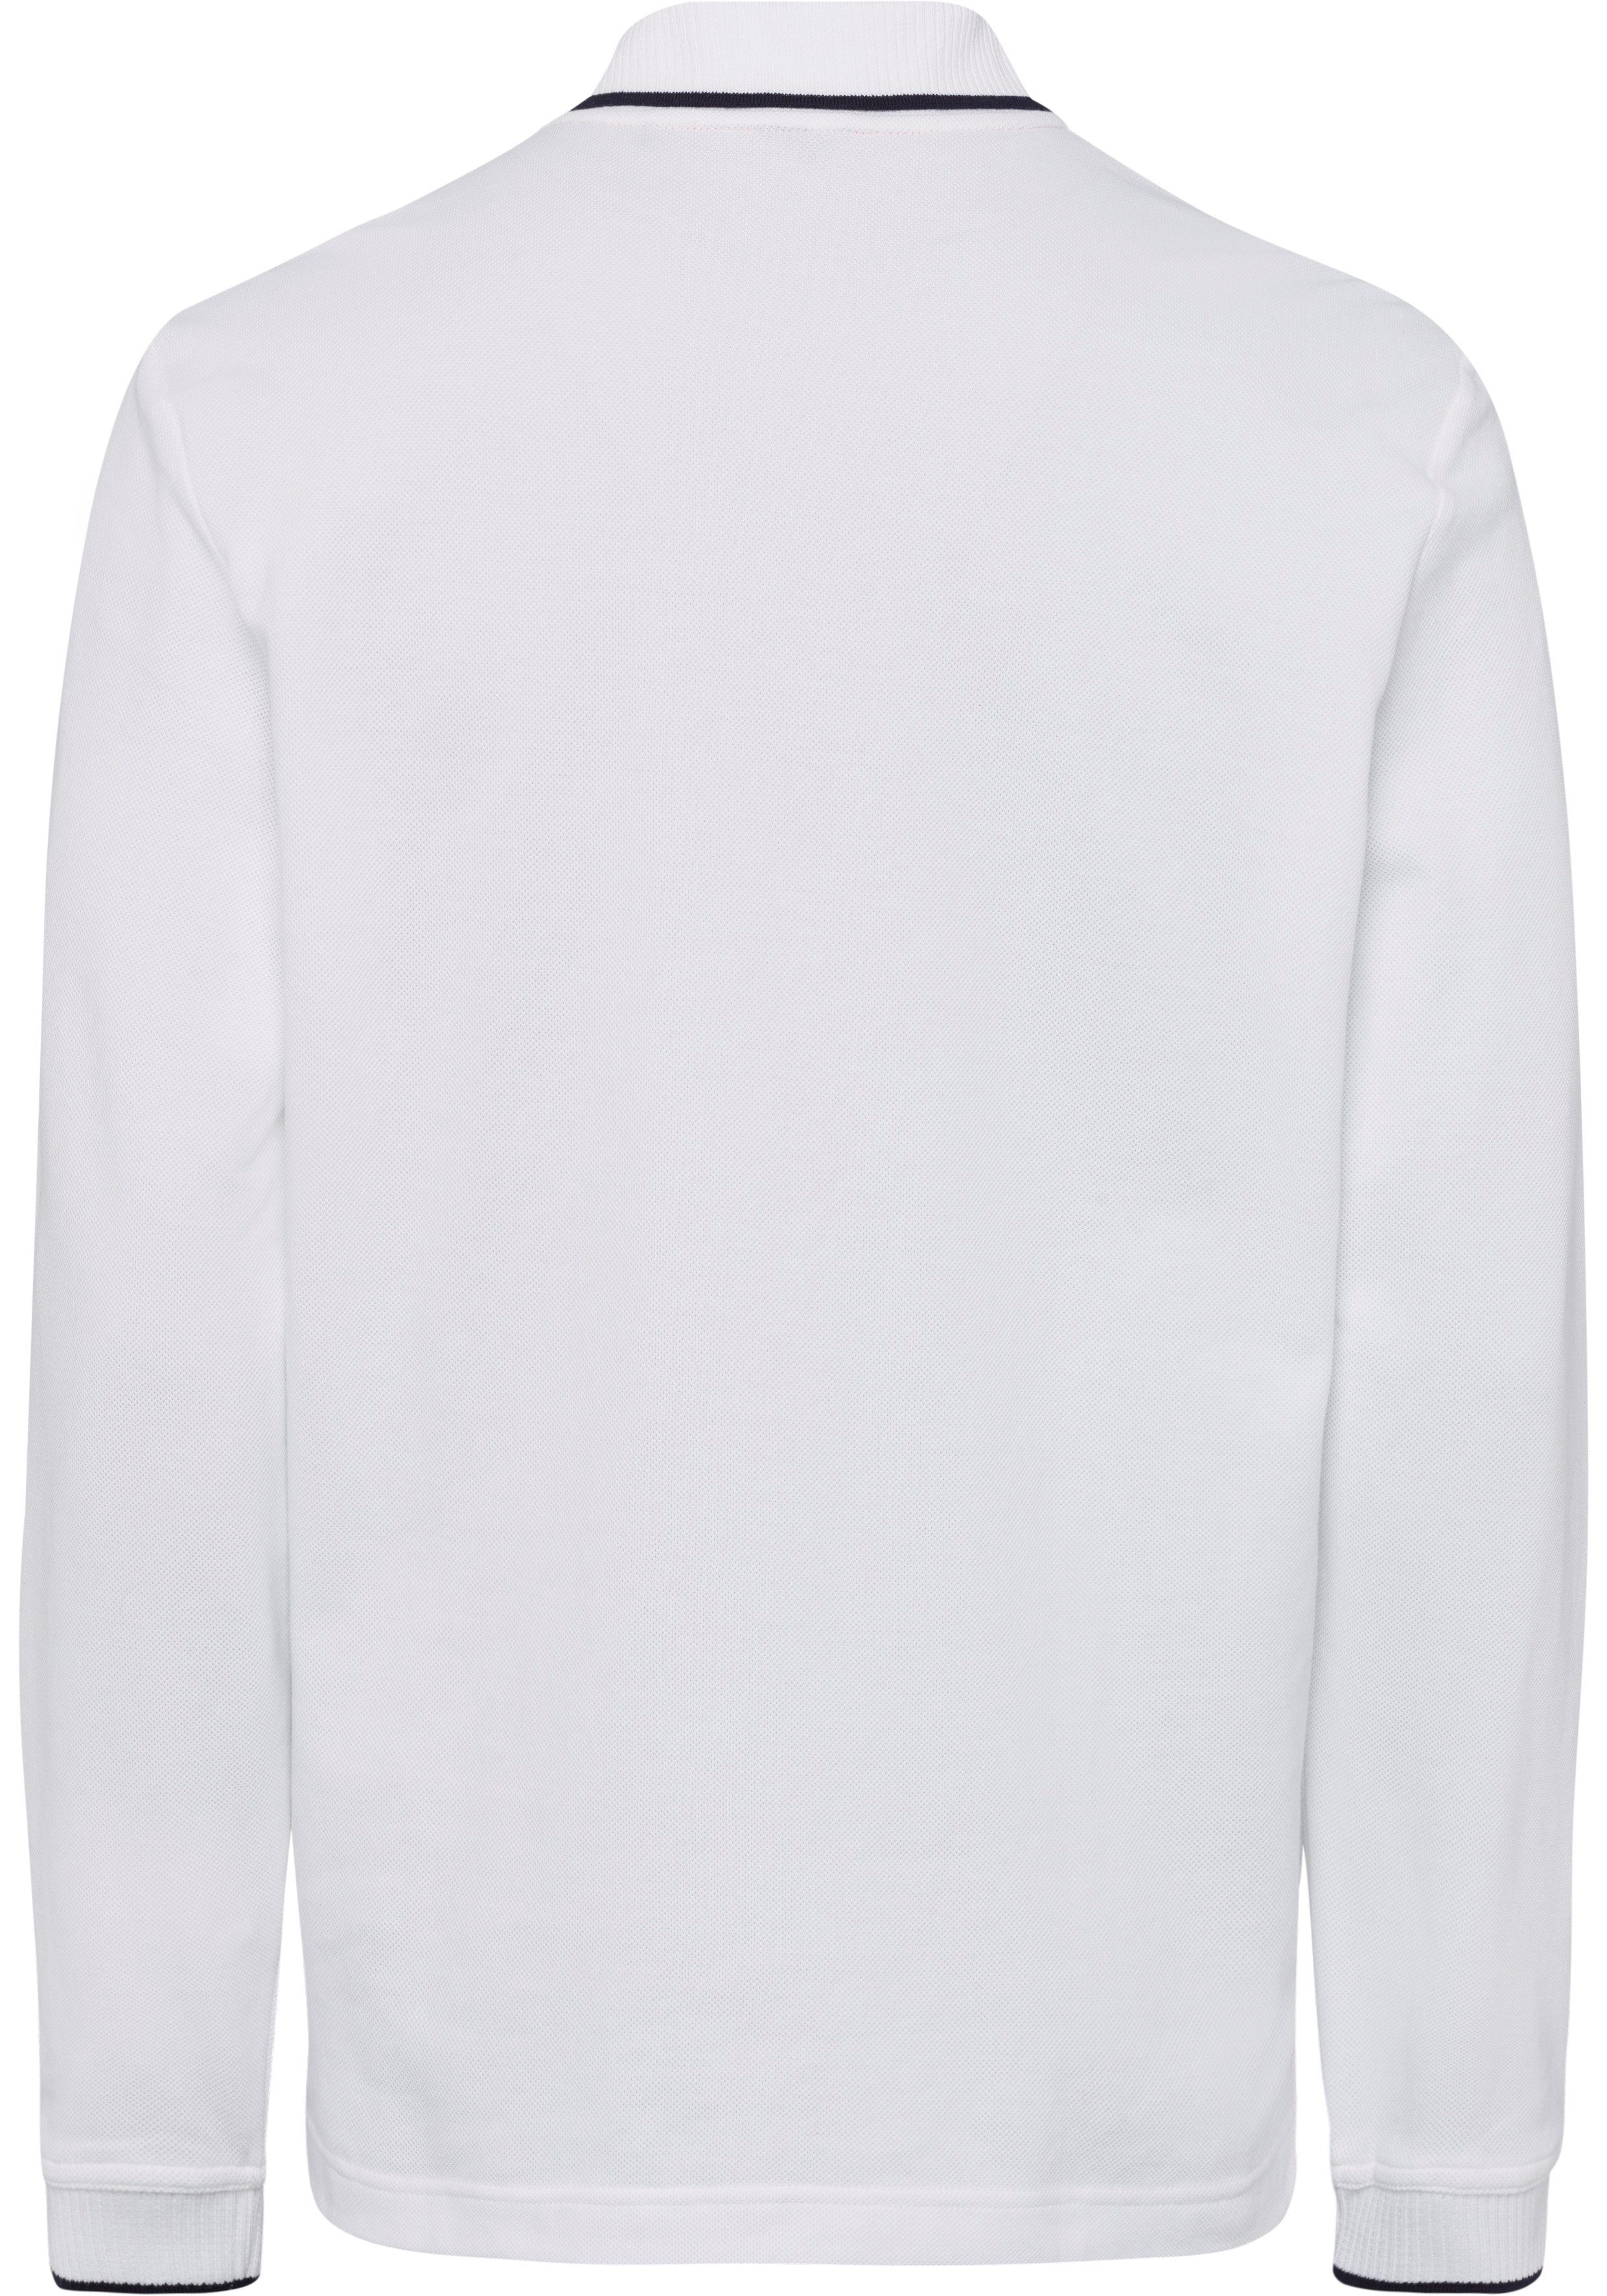 ORANGE Pefelt Poloshirt White mit Kontrastkanten BOSS